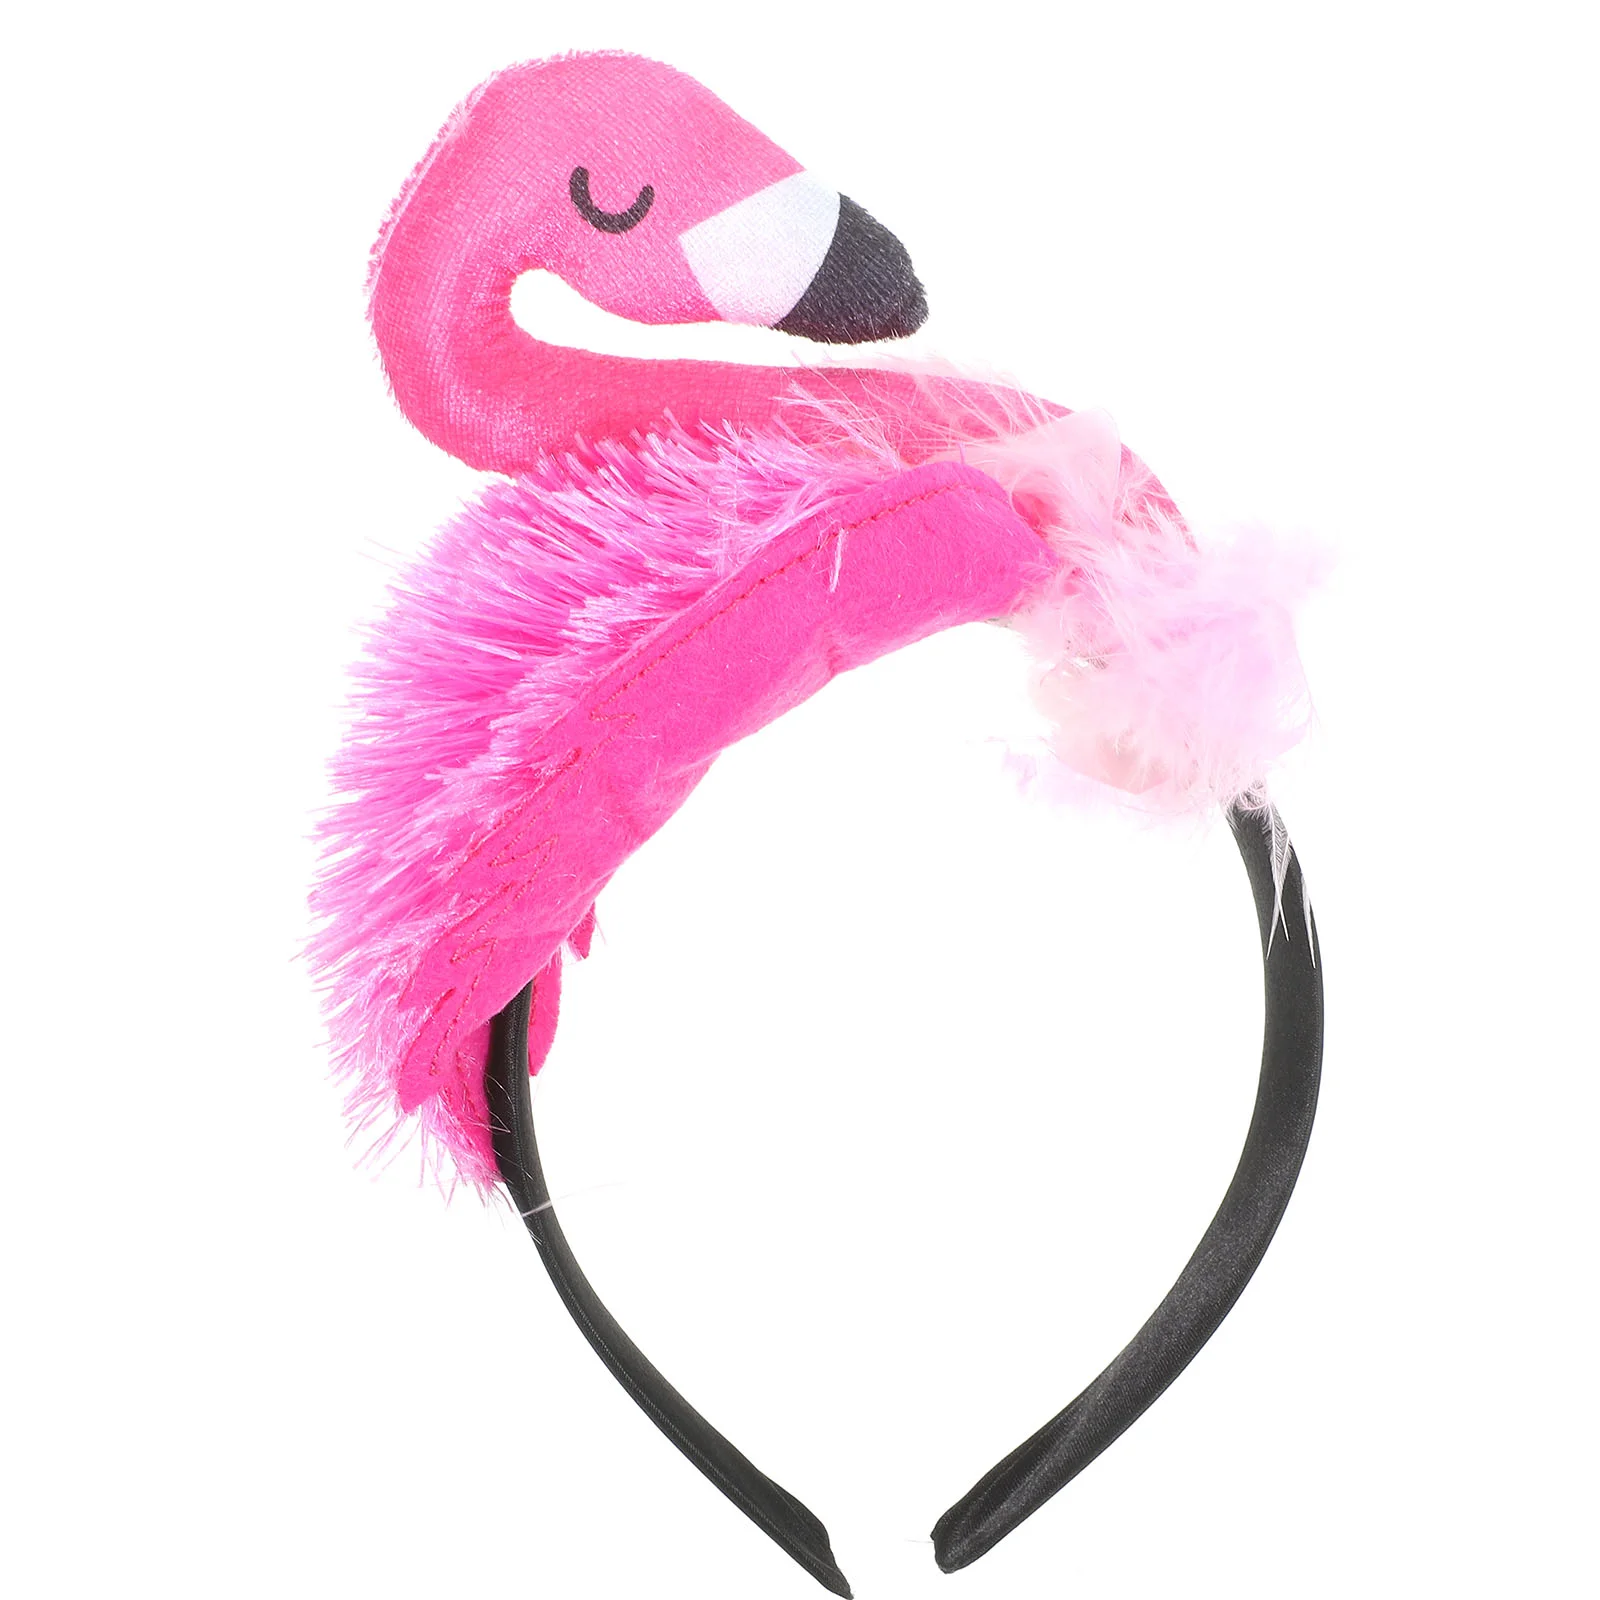 Hair Flamingo Hair Accessories Headbands Party Decoration (Pink) Birthday Party Kids Headwear Halloween Christmas Gifts flamingo вольер для животных